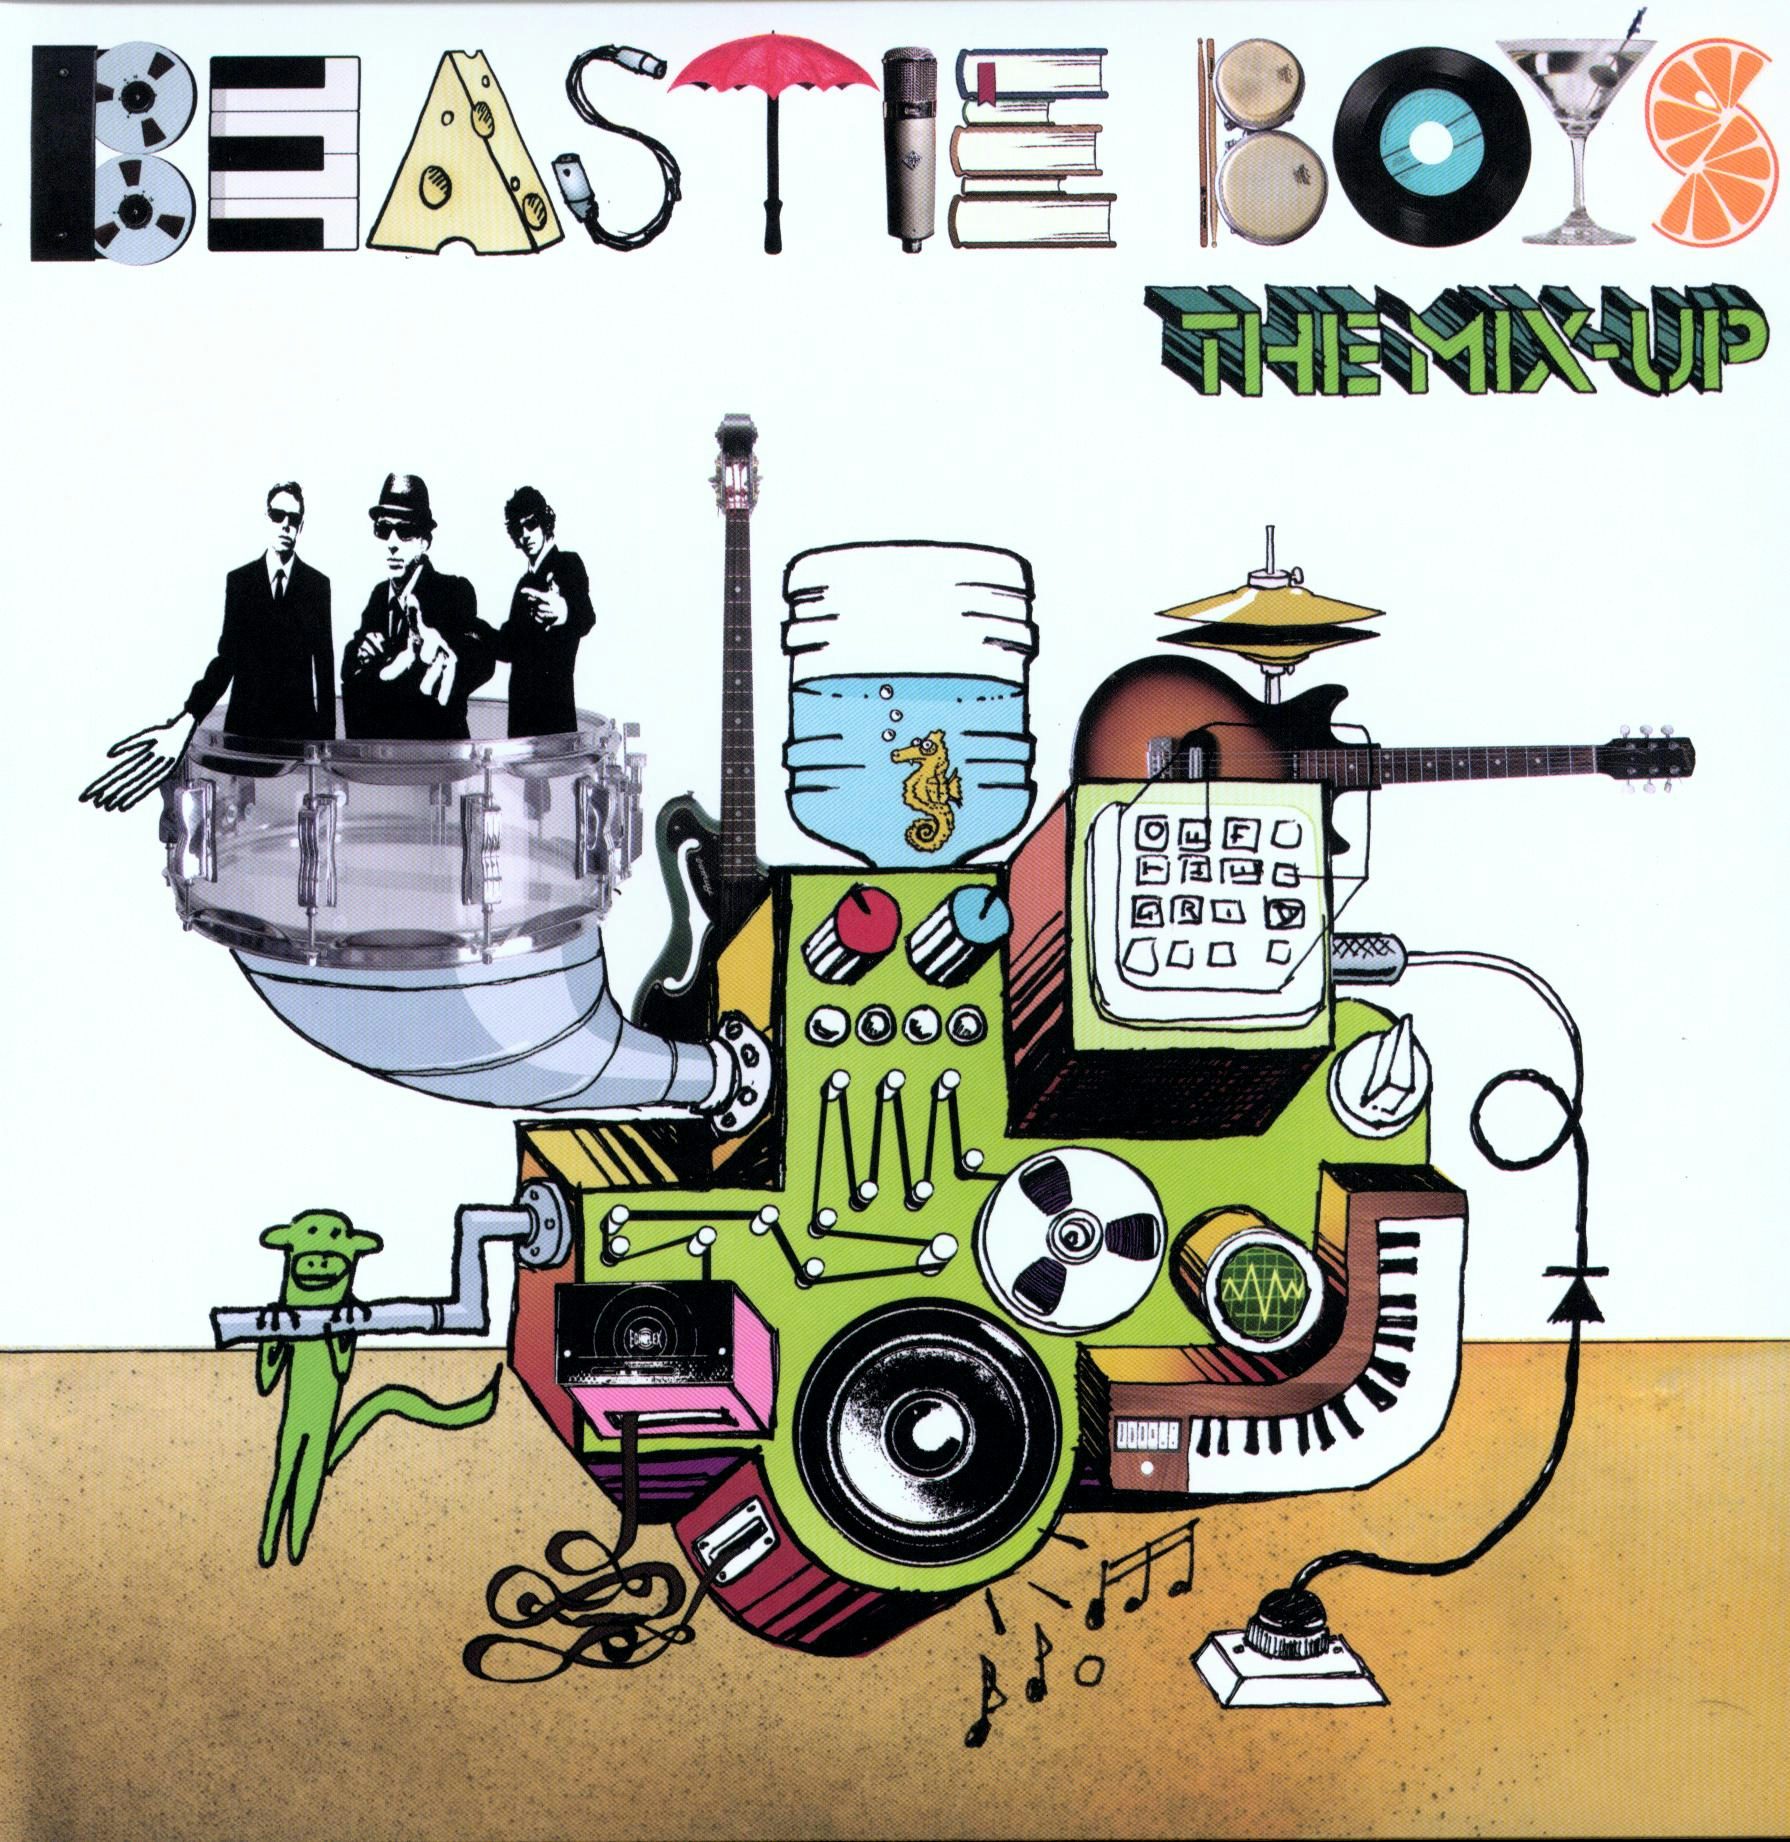 Beastie Boys MIX UP Vinyl Record